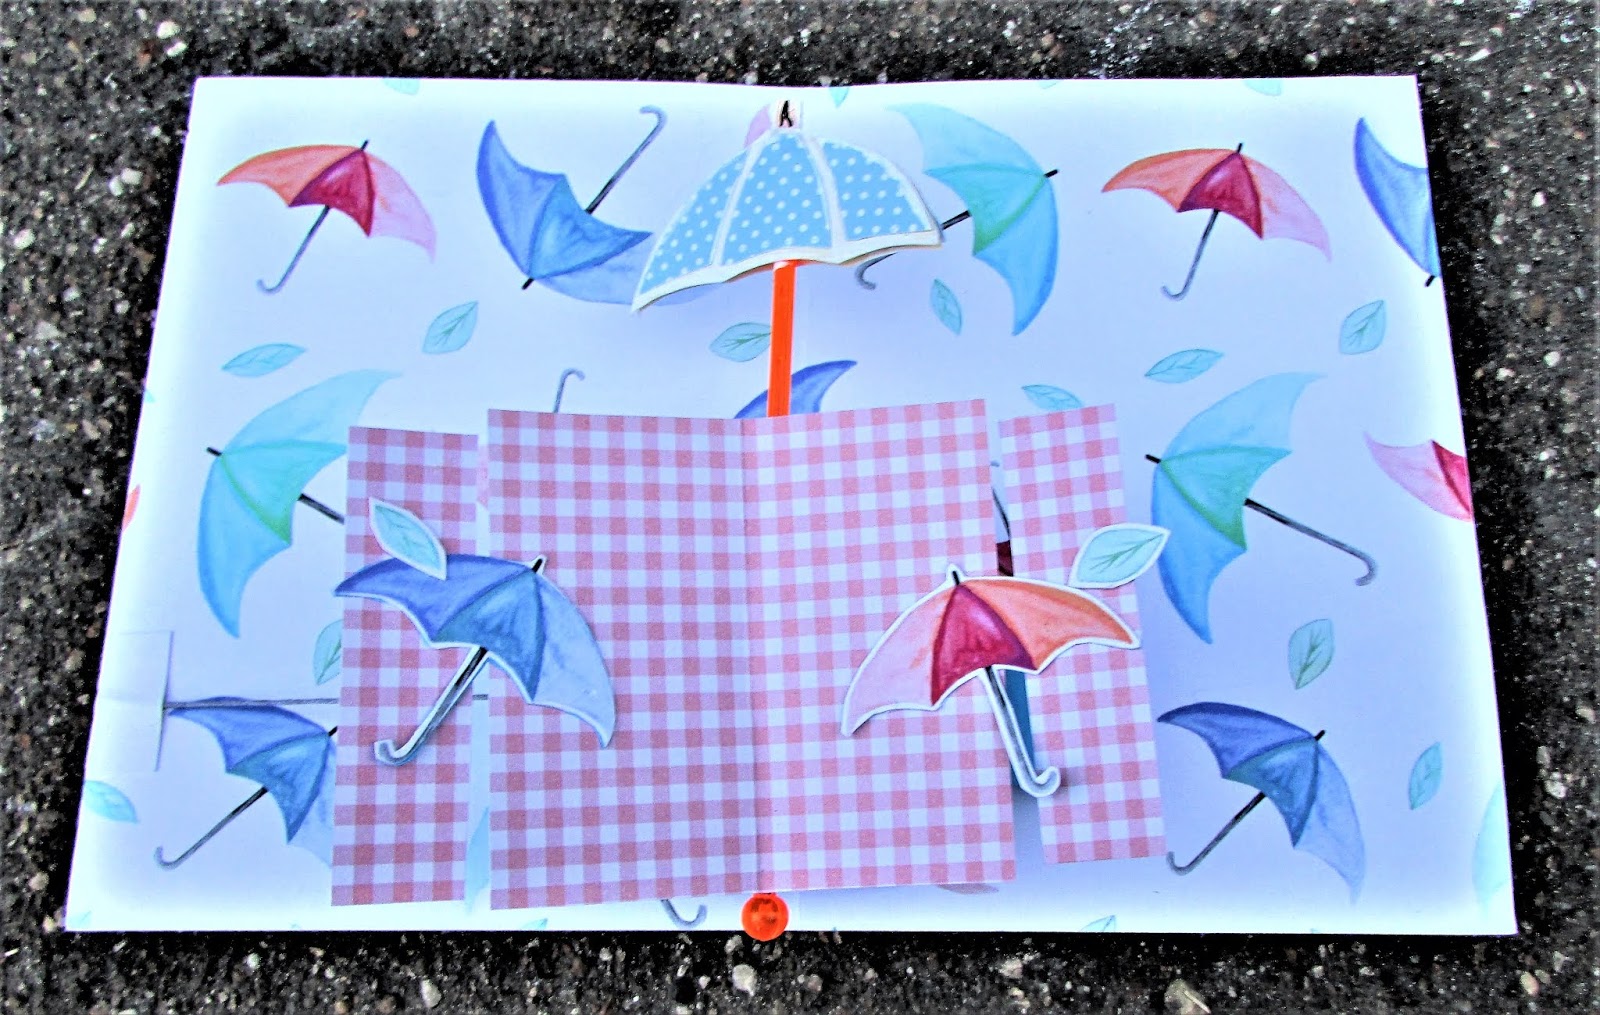 Открытка зонтик. Объемная открытка зонтик. Открытка с зонтиком. Раскладная открытка зонт. Идея открытки с зонтом.